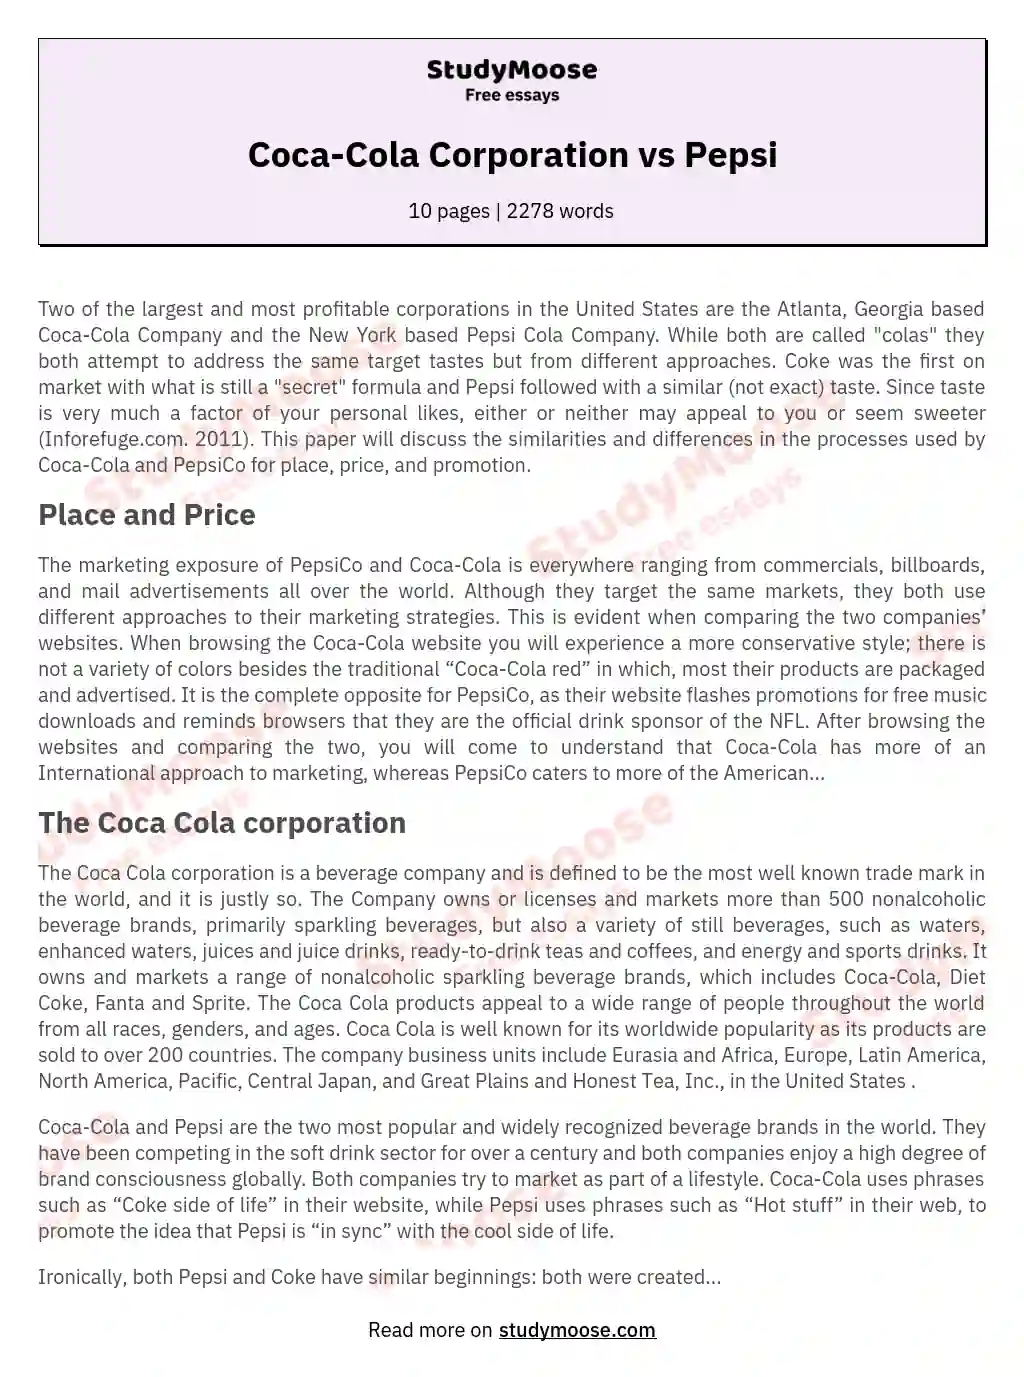 argumentative essay about coke vs pepsi